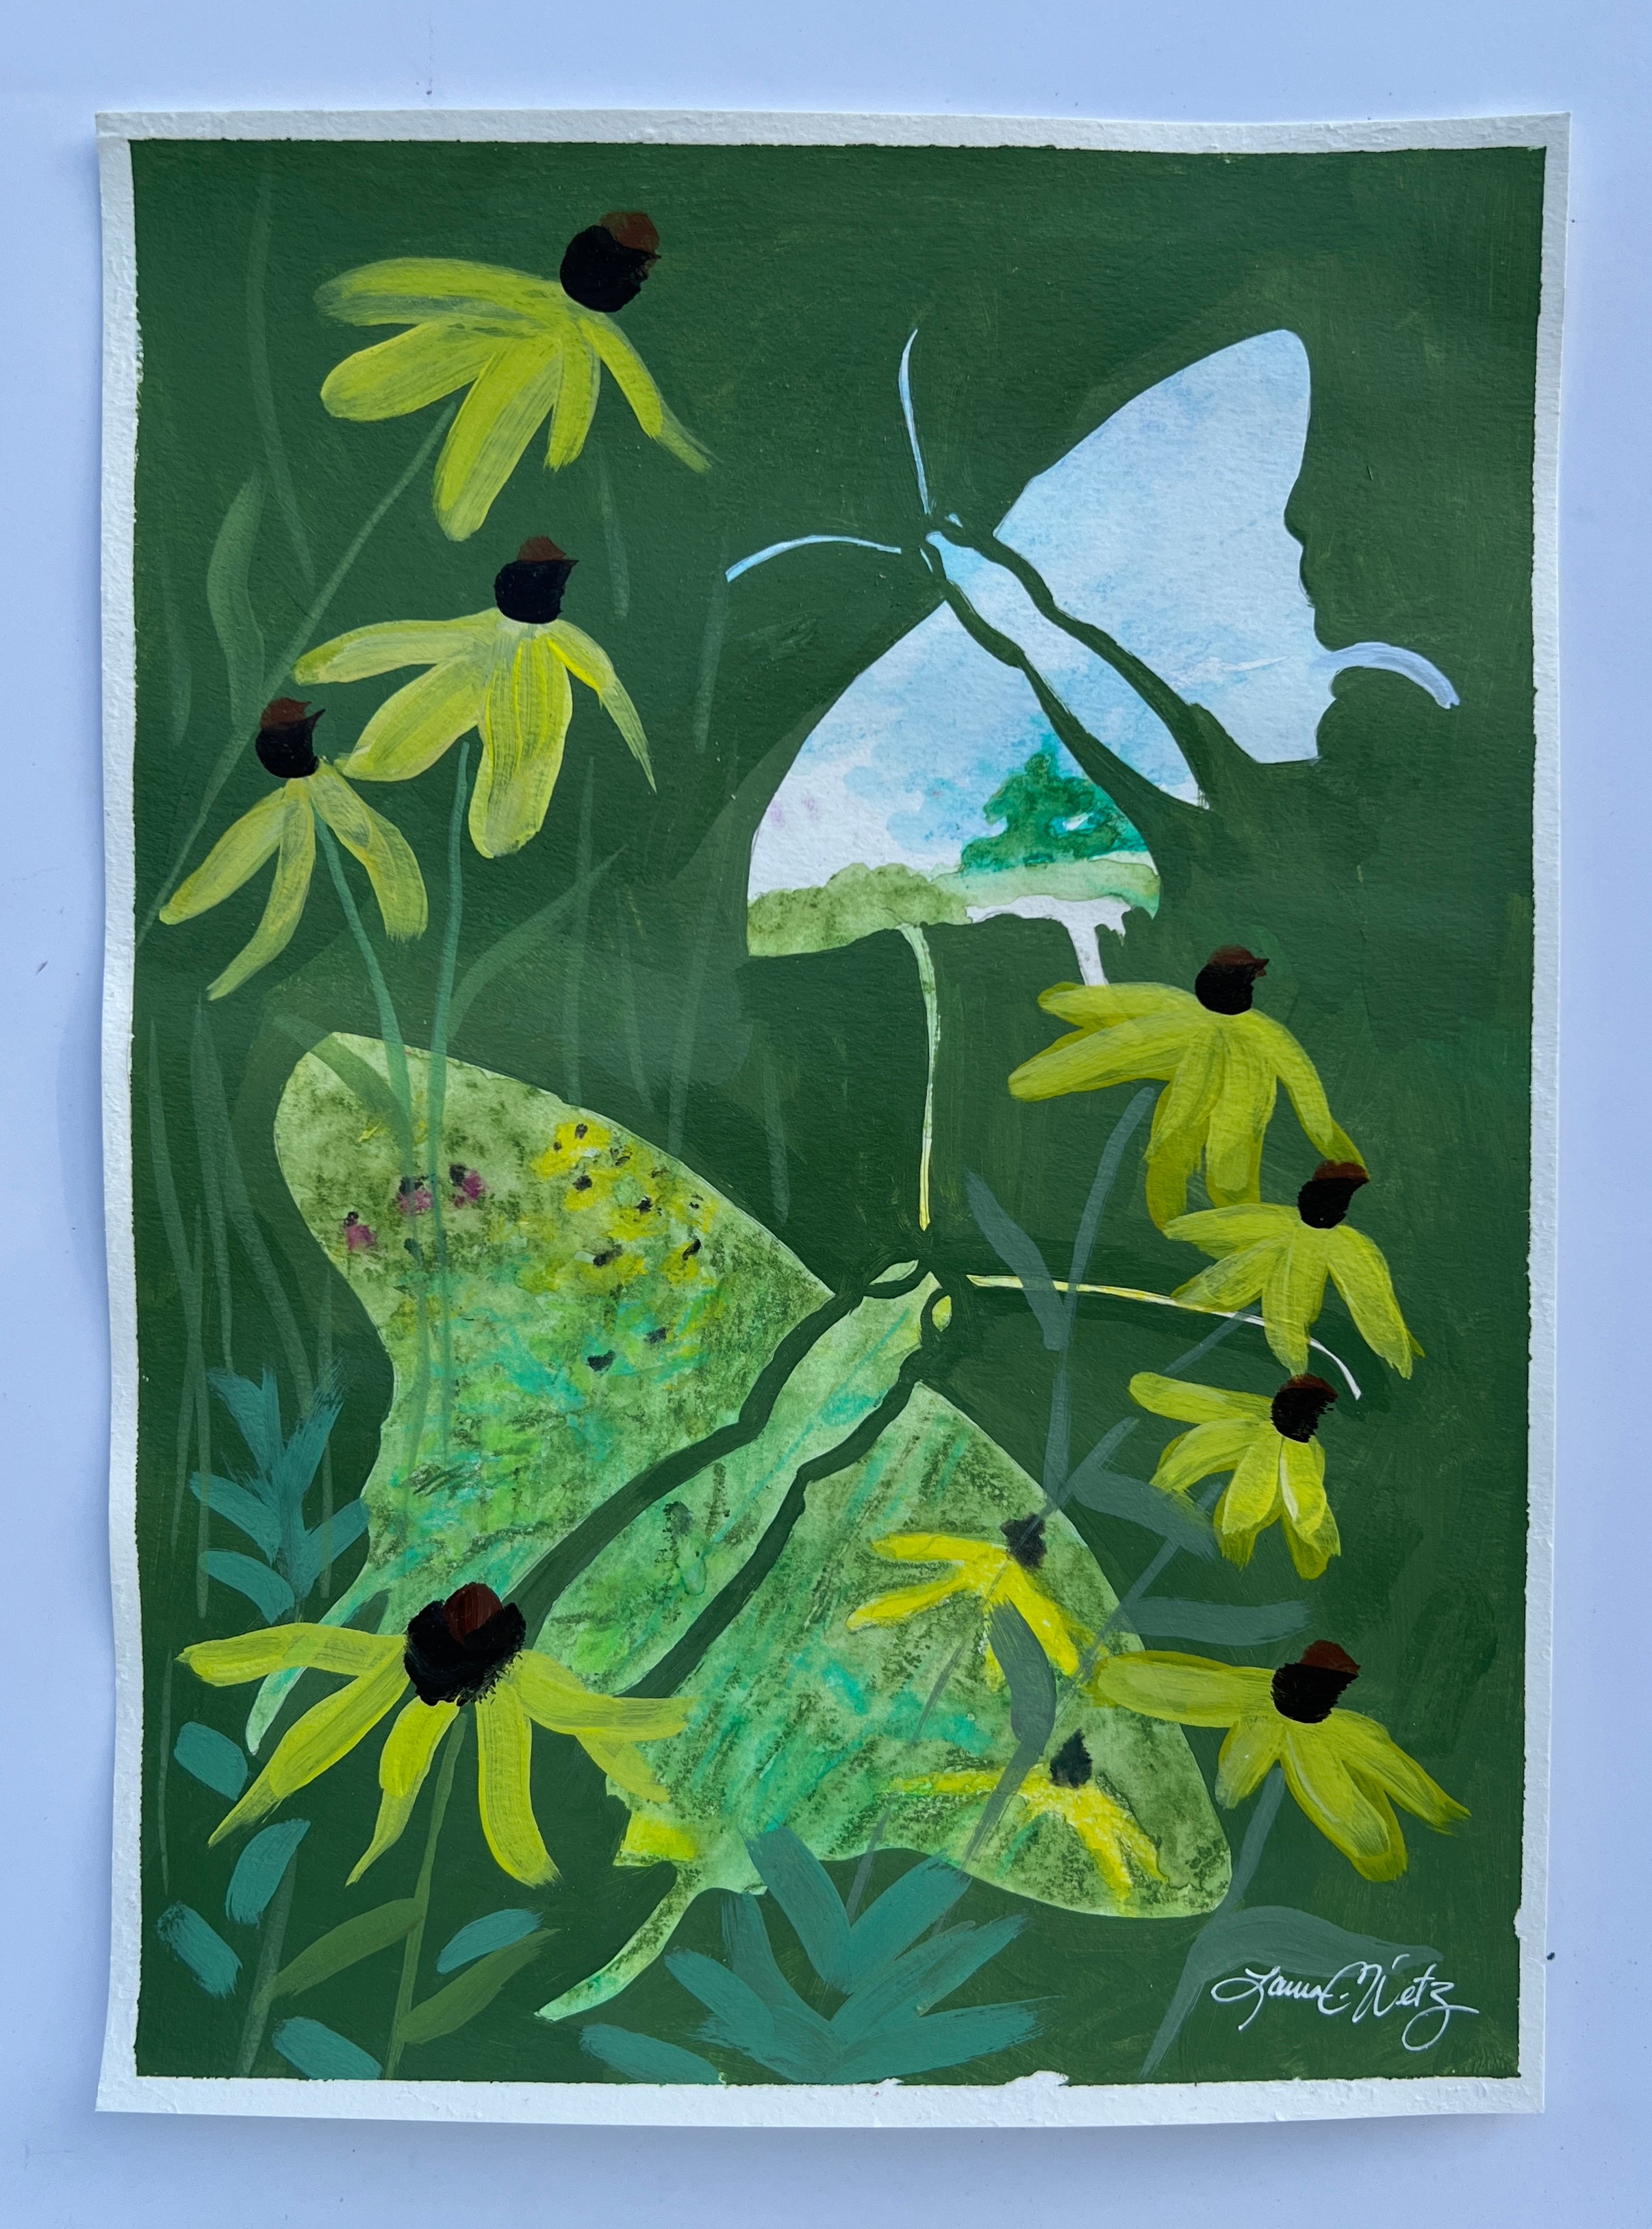 Butterflies and Coneflowers - Original Painting - Not Matted, Unframed